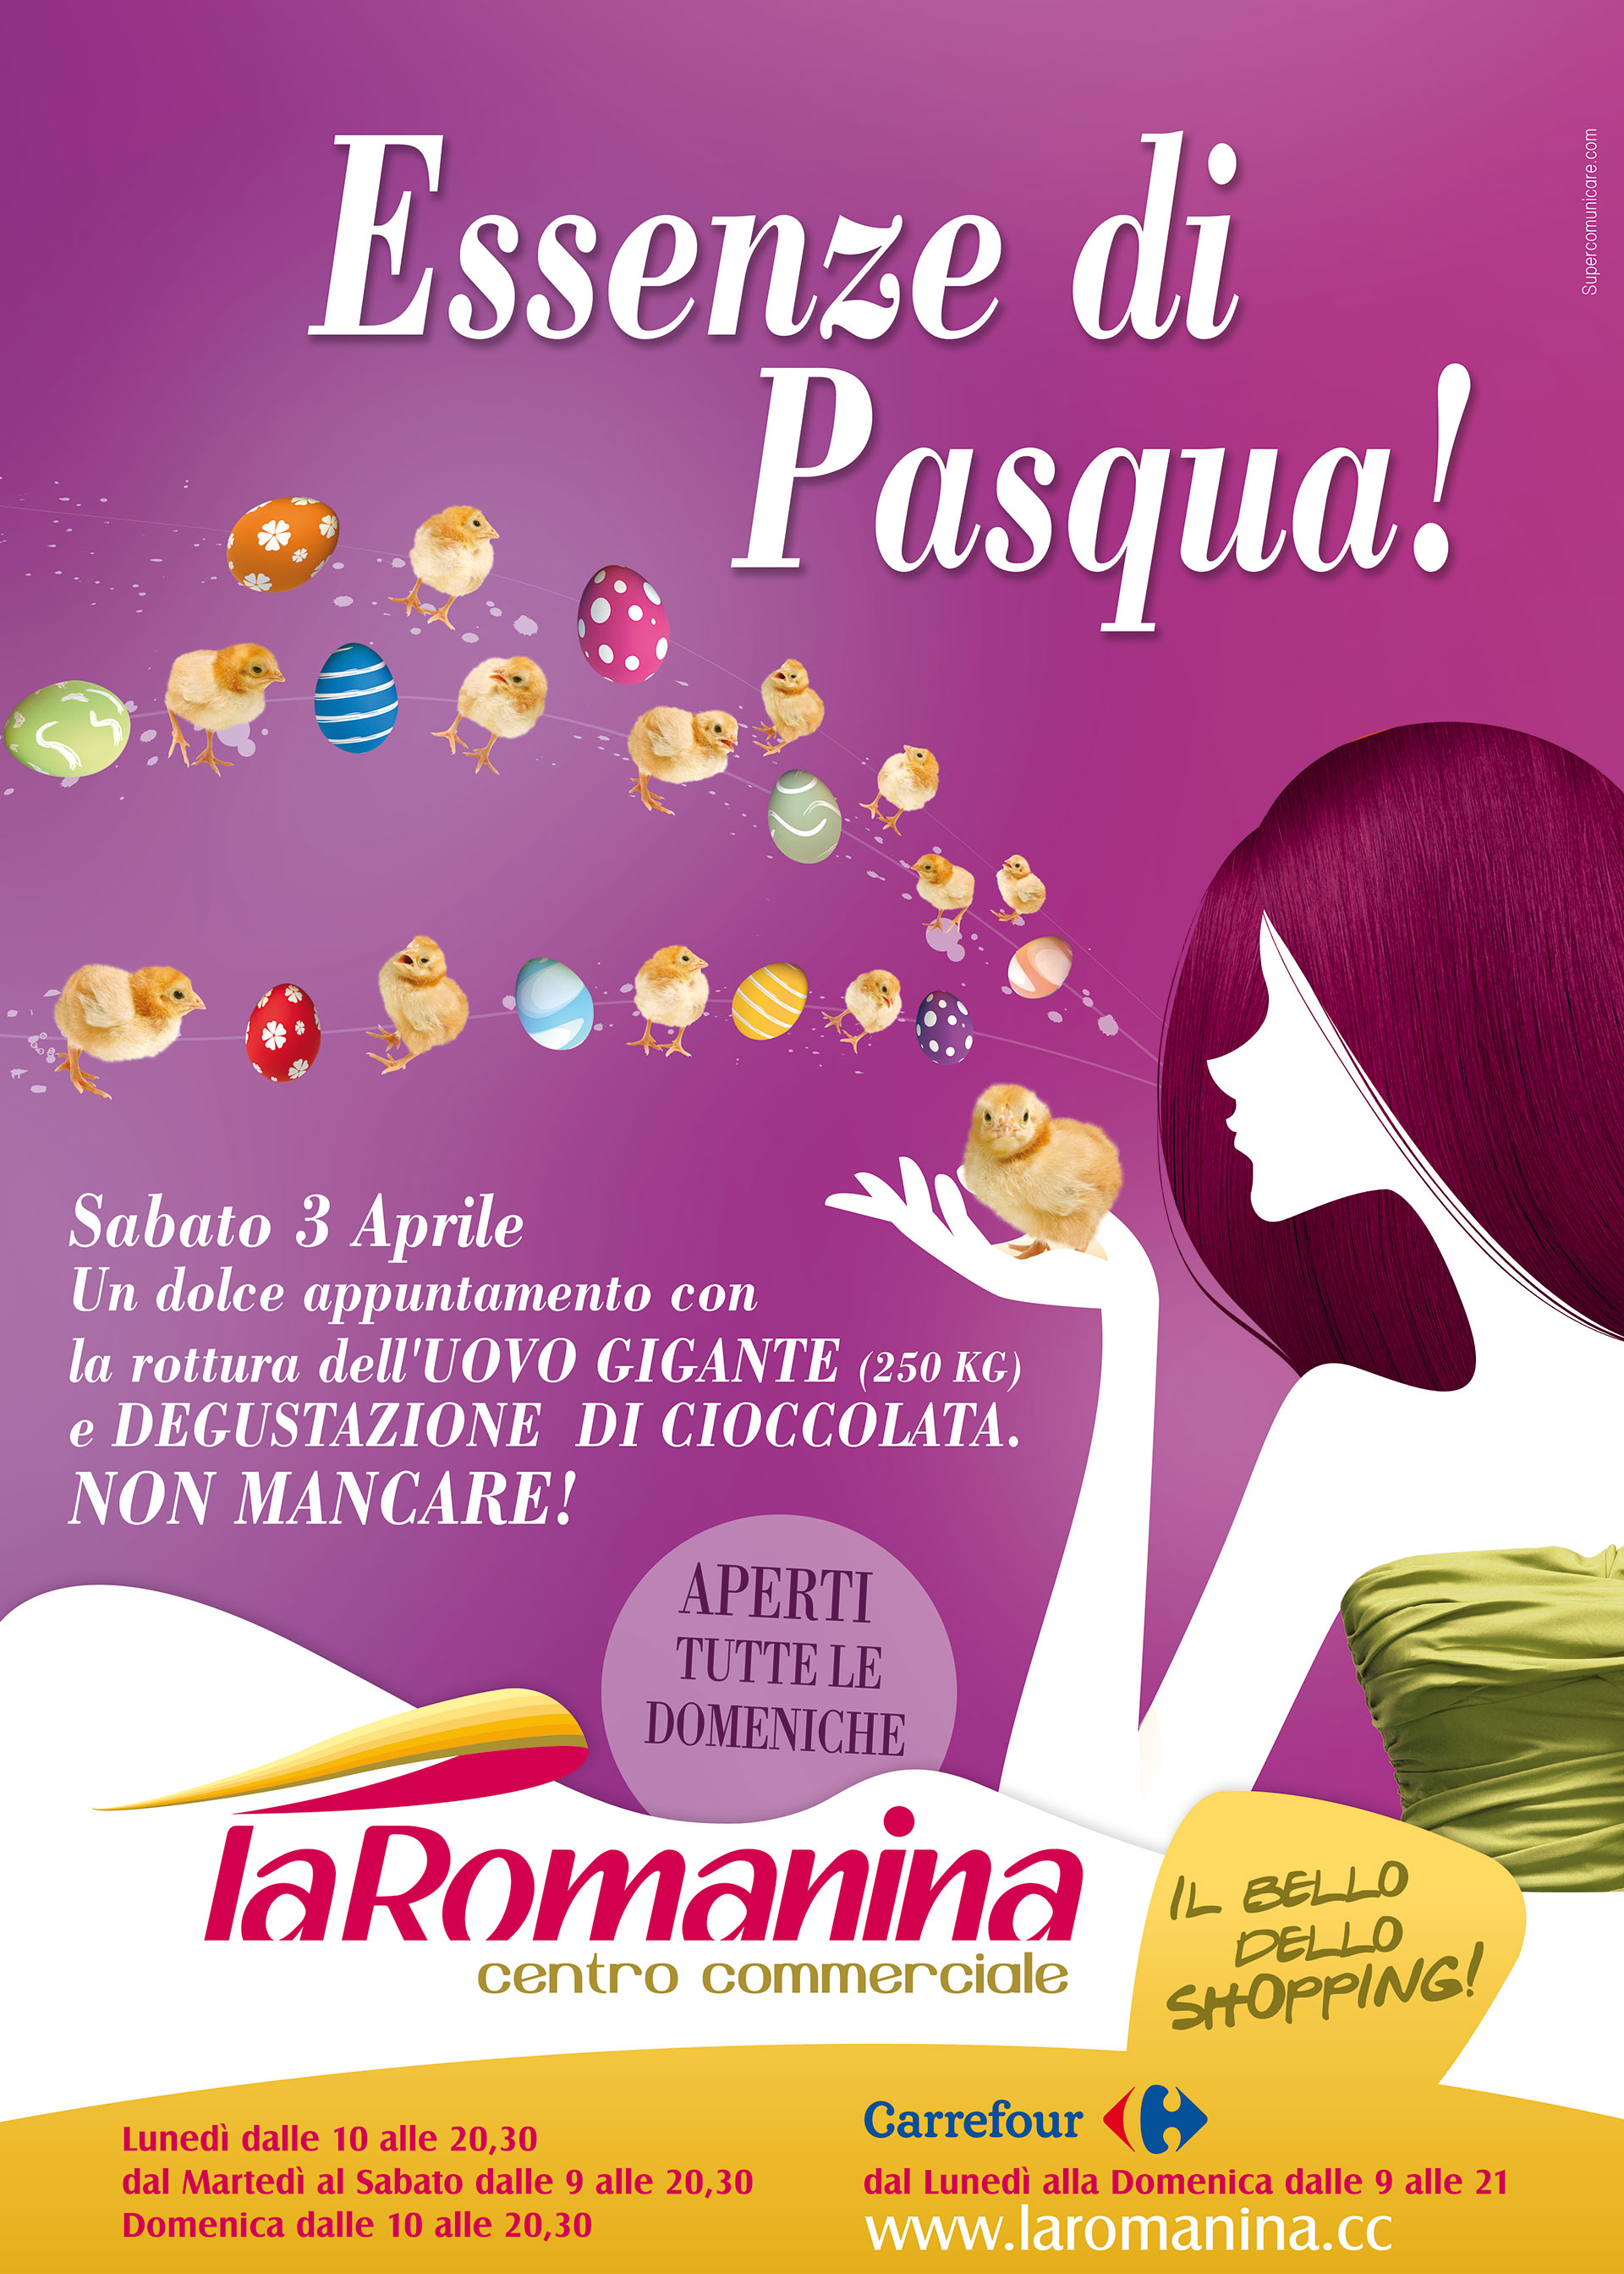 lasagnuz-la-romanina-manifesto-pasqua-2010